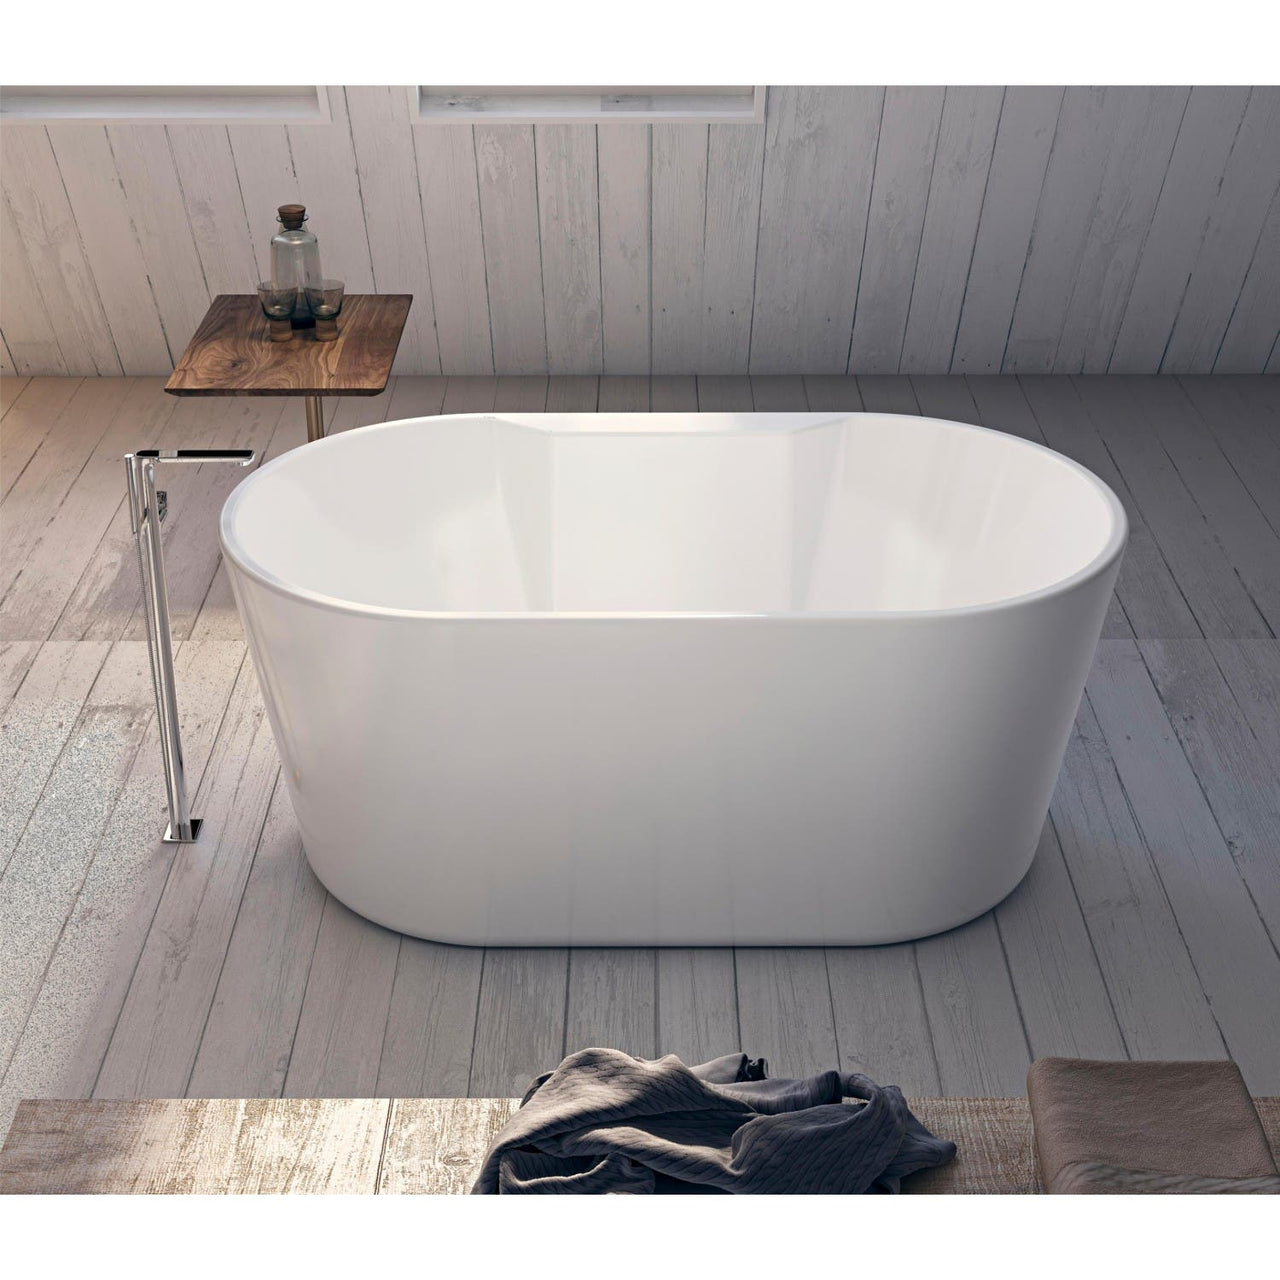 Aqua Eden VTDE563224 56-Inch Acrylic Freestanding Tub with Drain - BNGBath